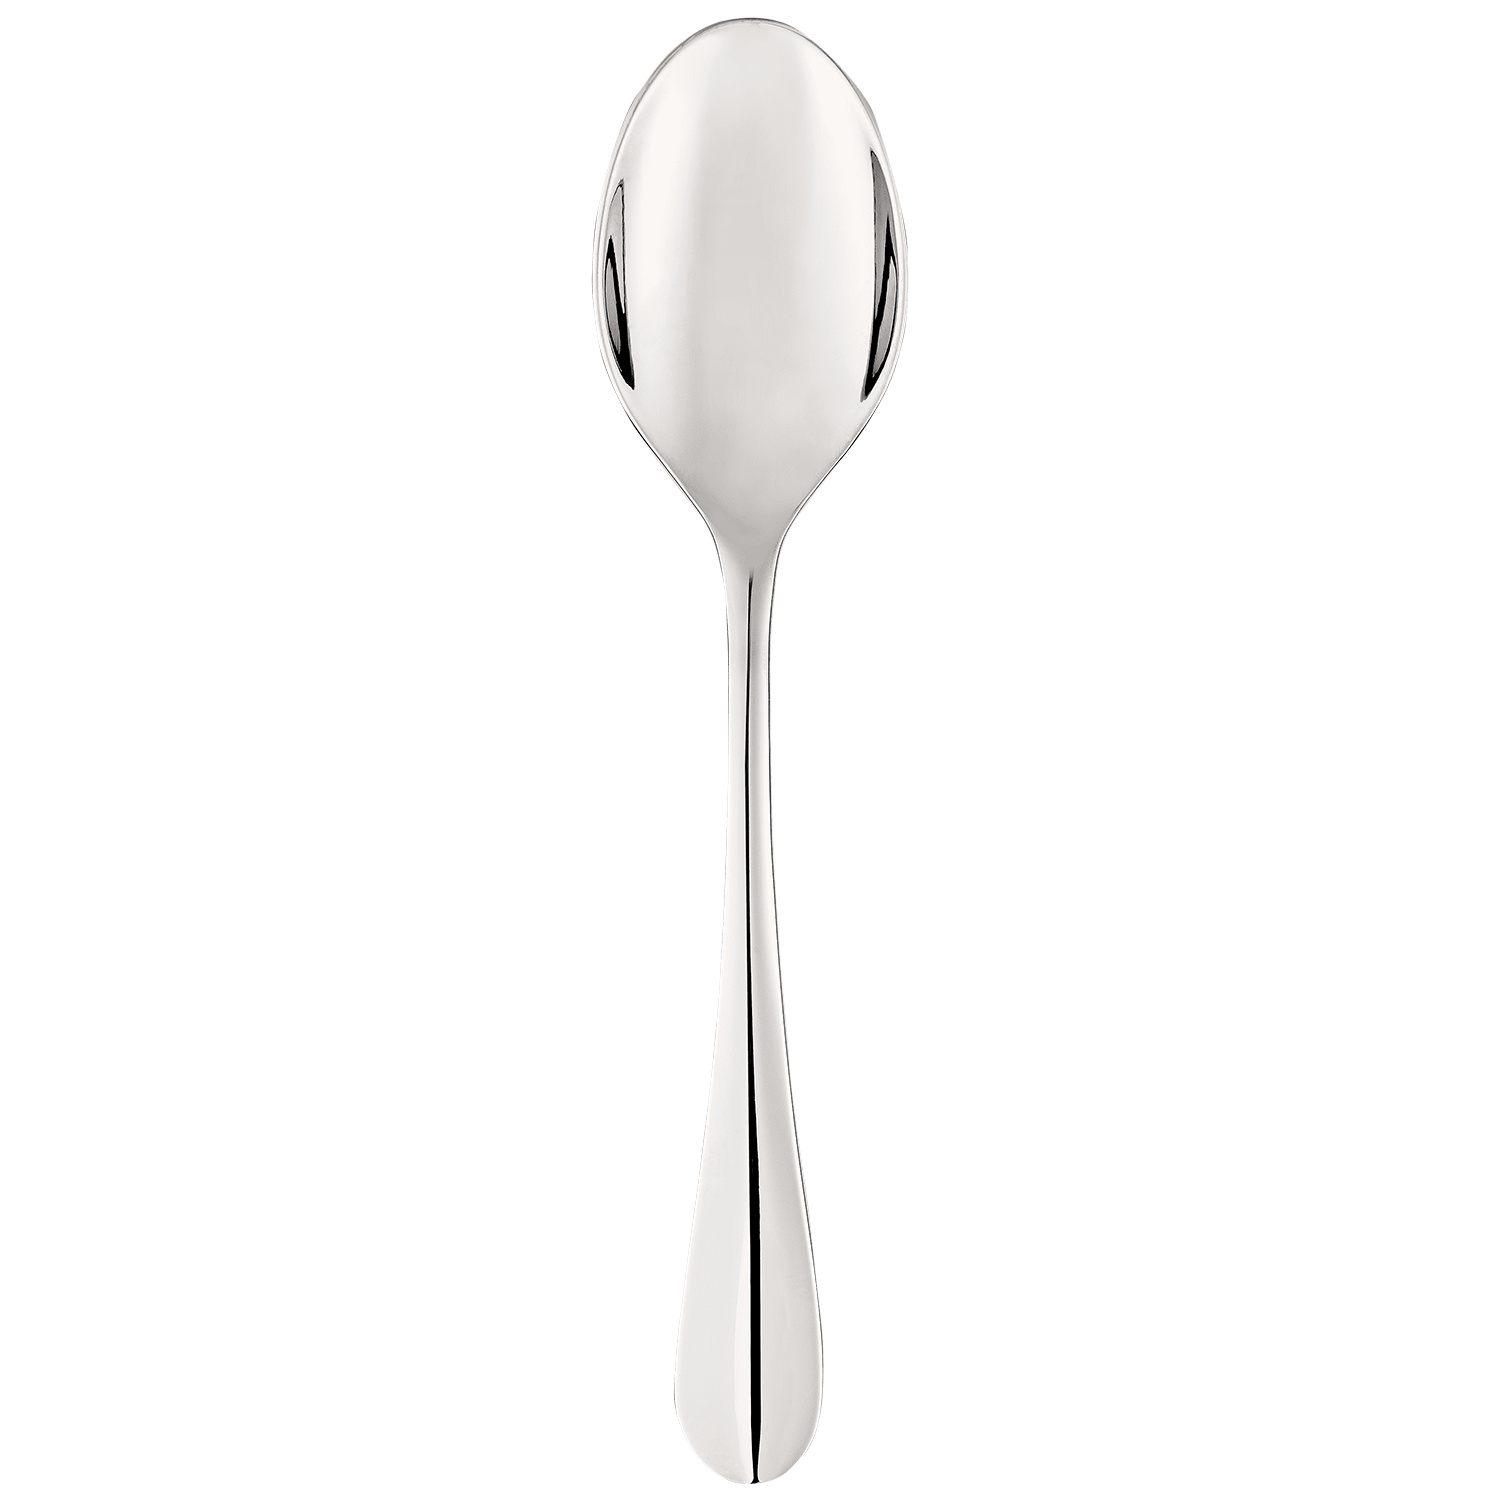 Stainless Steel serving spoon